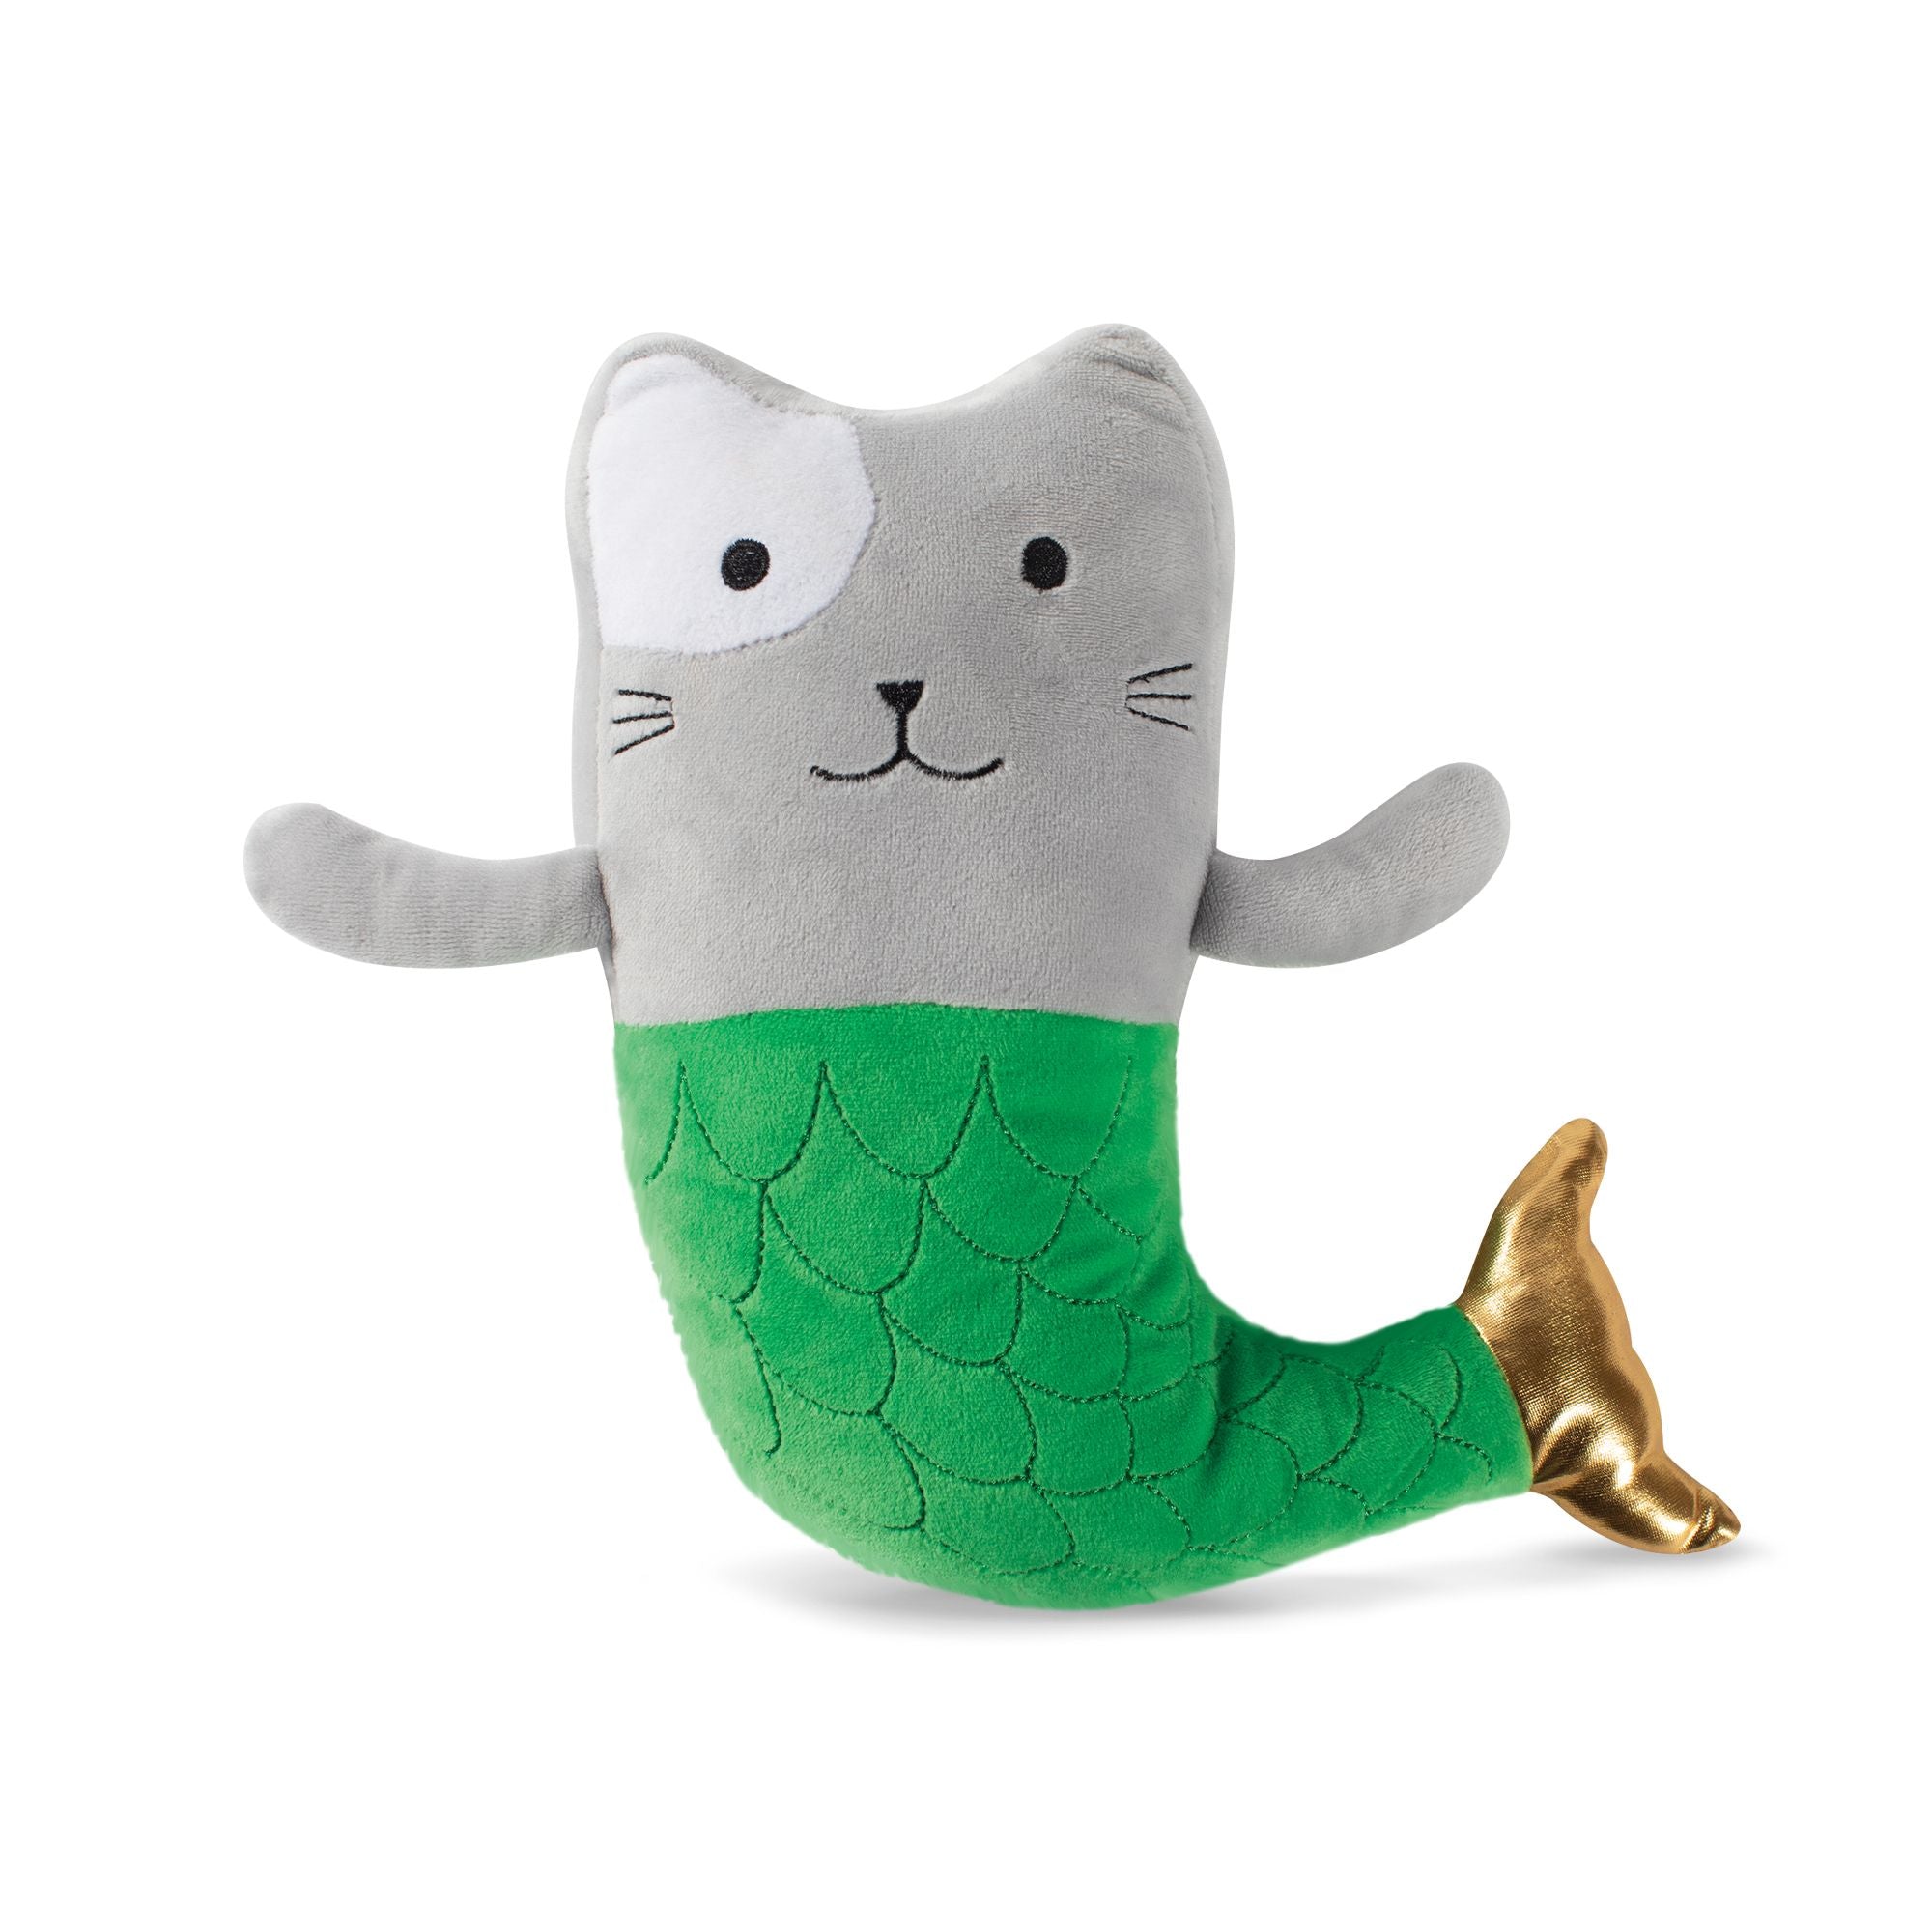 Fringe Studio PetShop Mercat  |  Squeaky Plush Toy